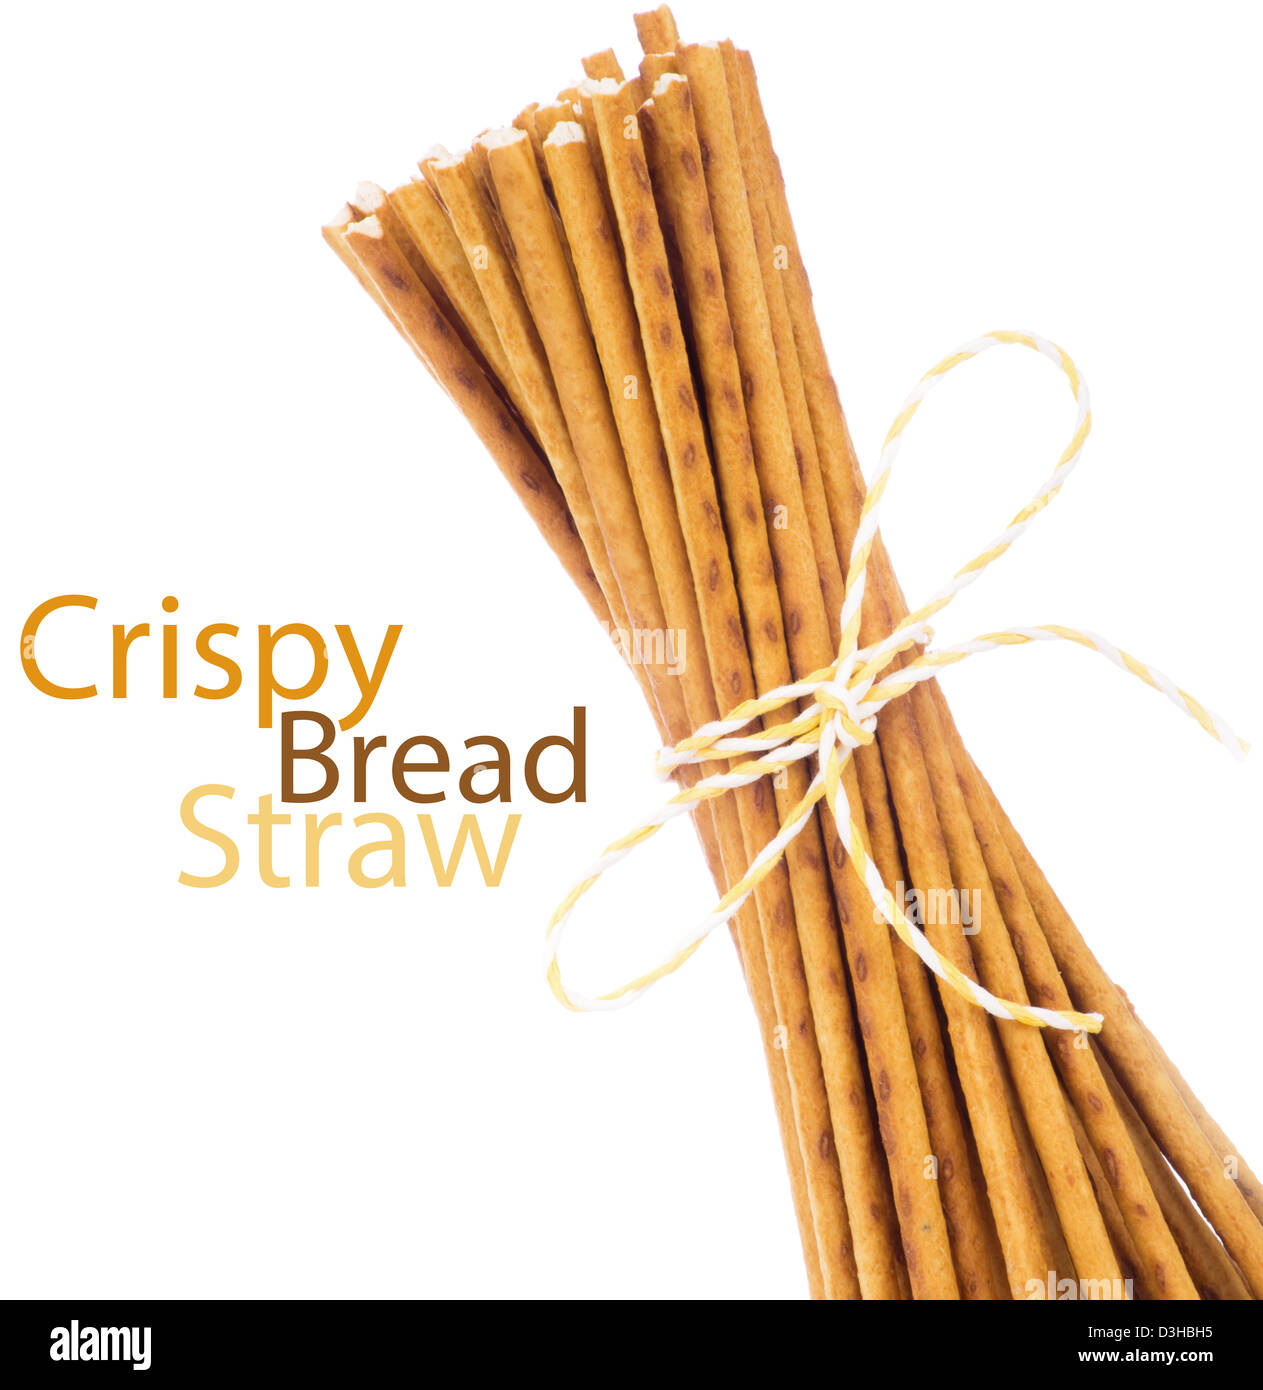 https://c8.alamy.com/comp/D3HBH5/crispy-bread-straw-D3HBH5.jpg